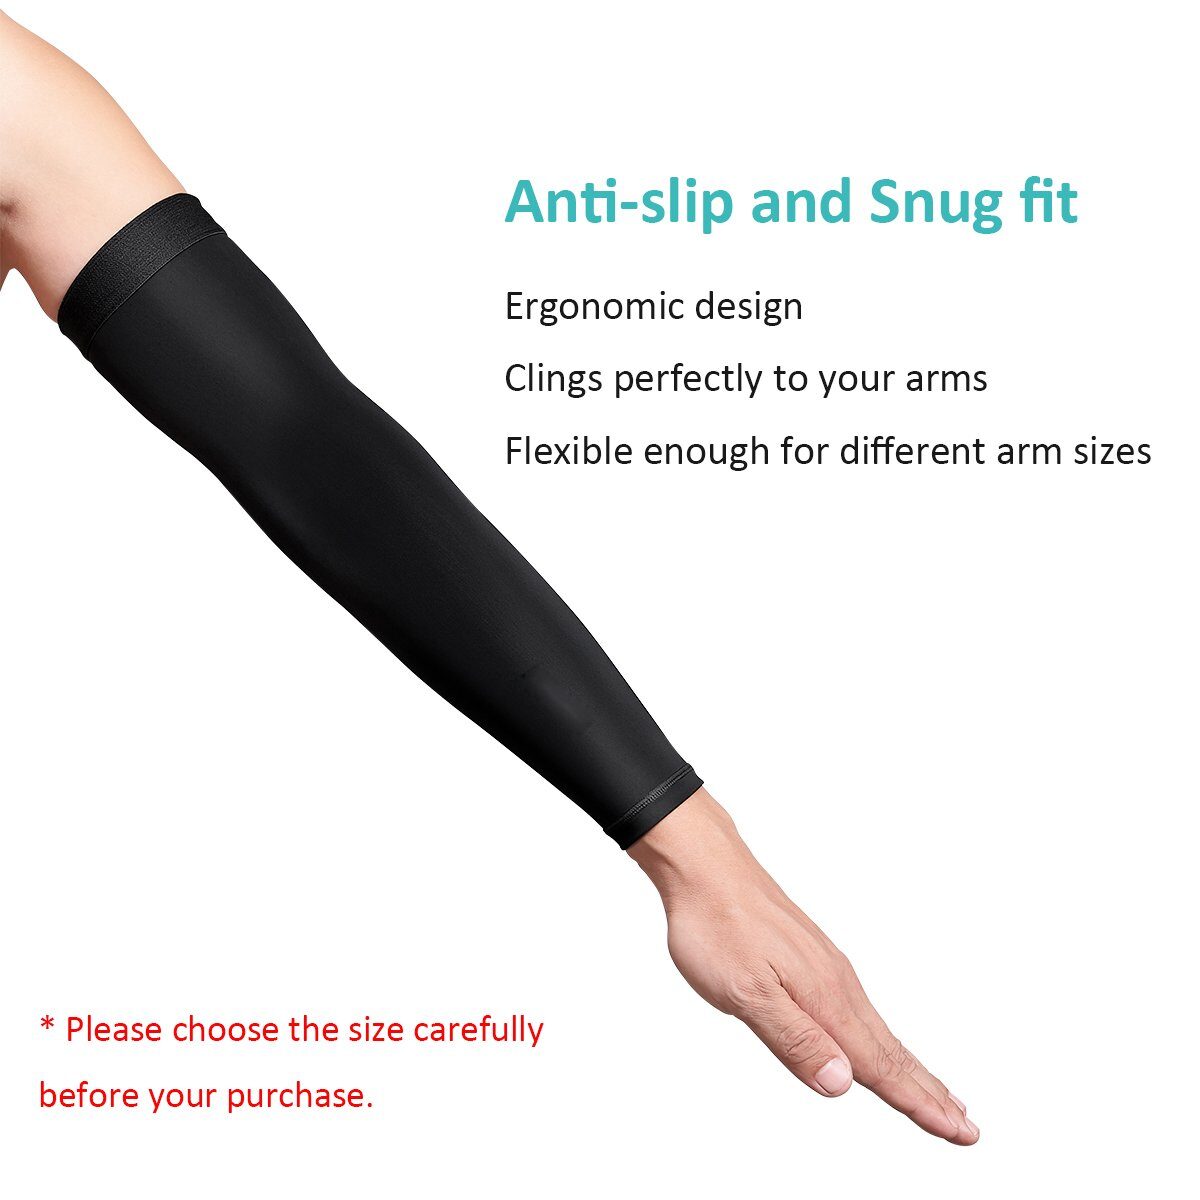 Anti slip and snug fit arm sleeves